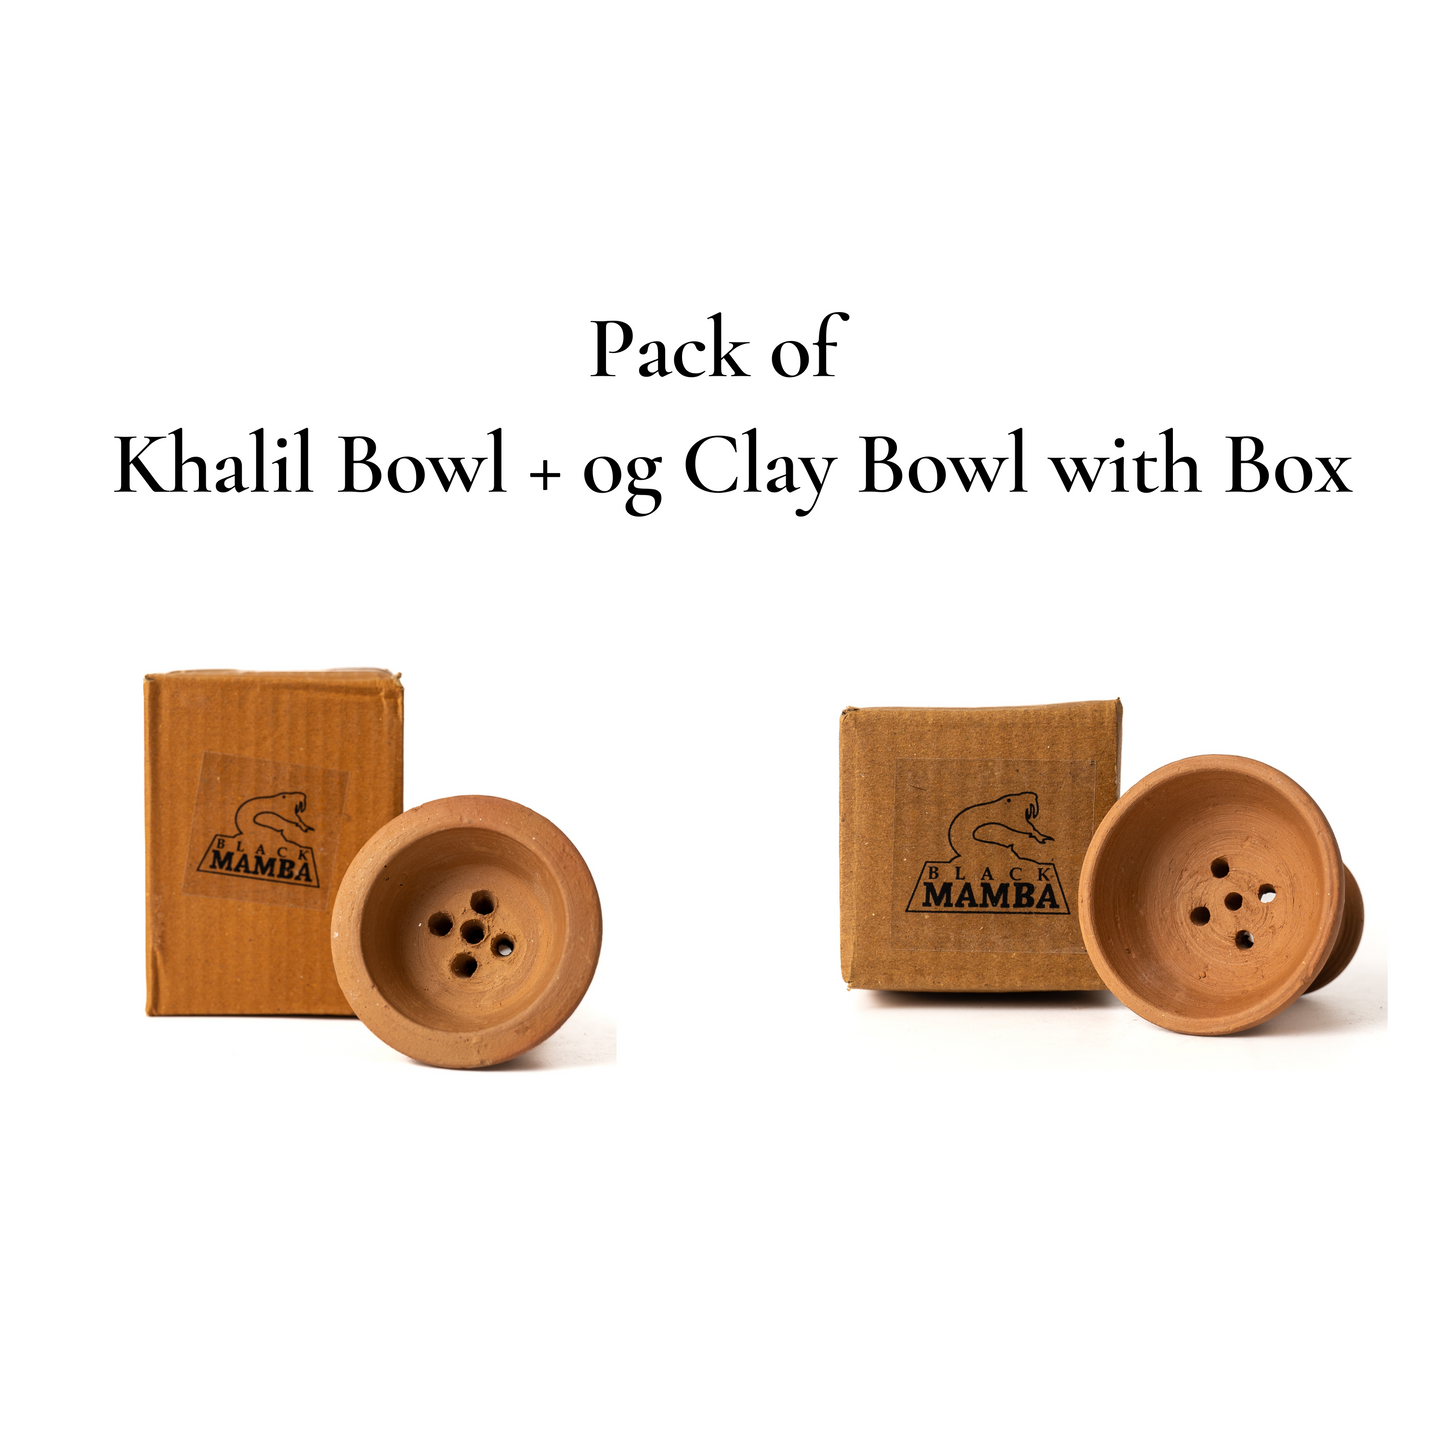 Pack of Basic Khalil Chillum + Basic og Clay Chillum with Box